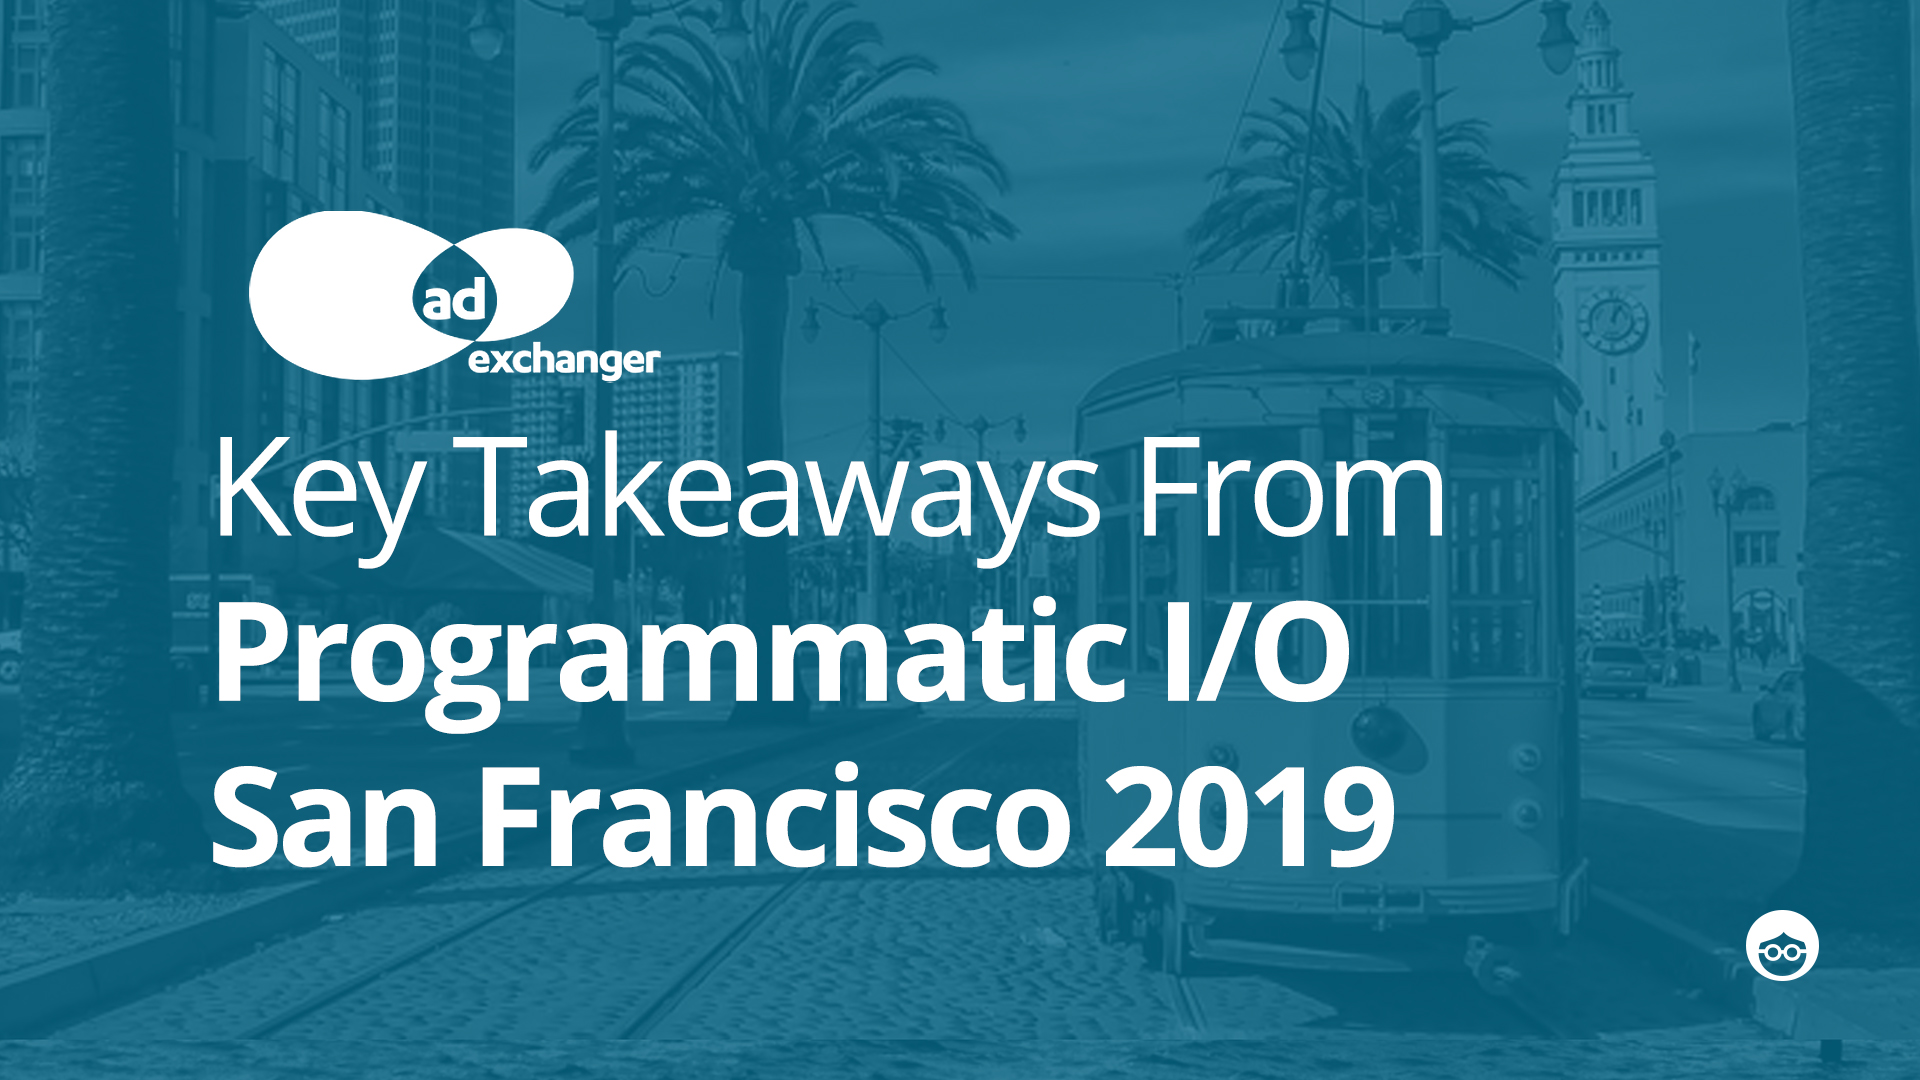 3 Takeaways From AdExchanger’s Programmatic I/O SF Summit Outbrain